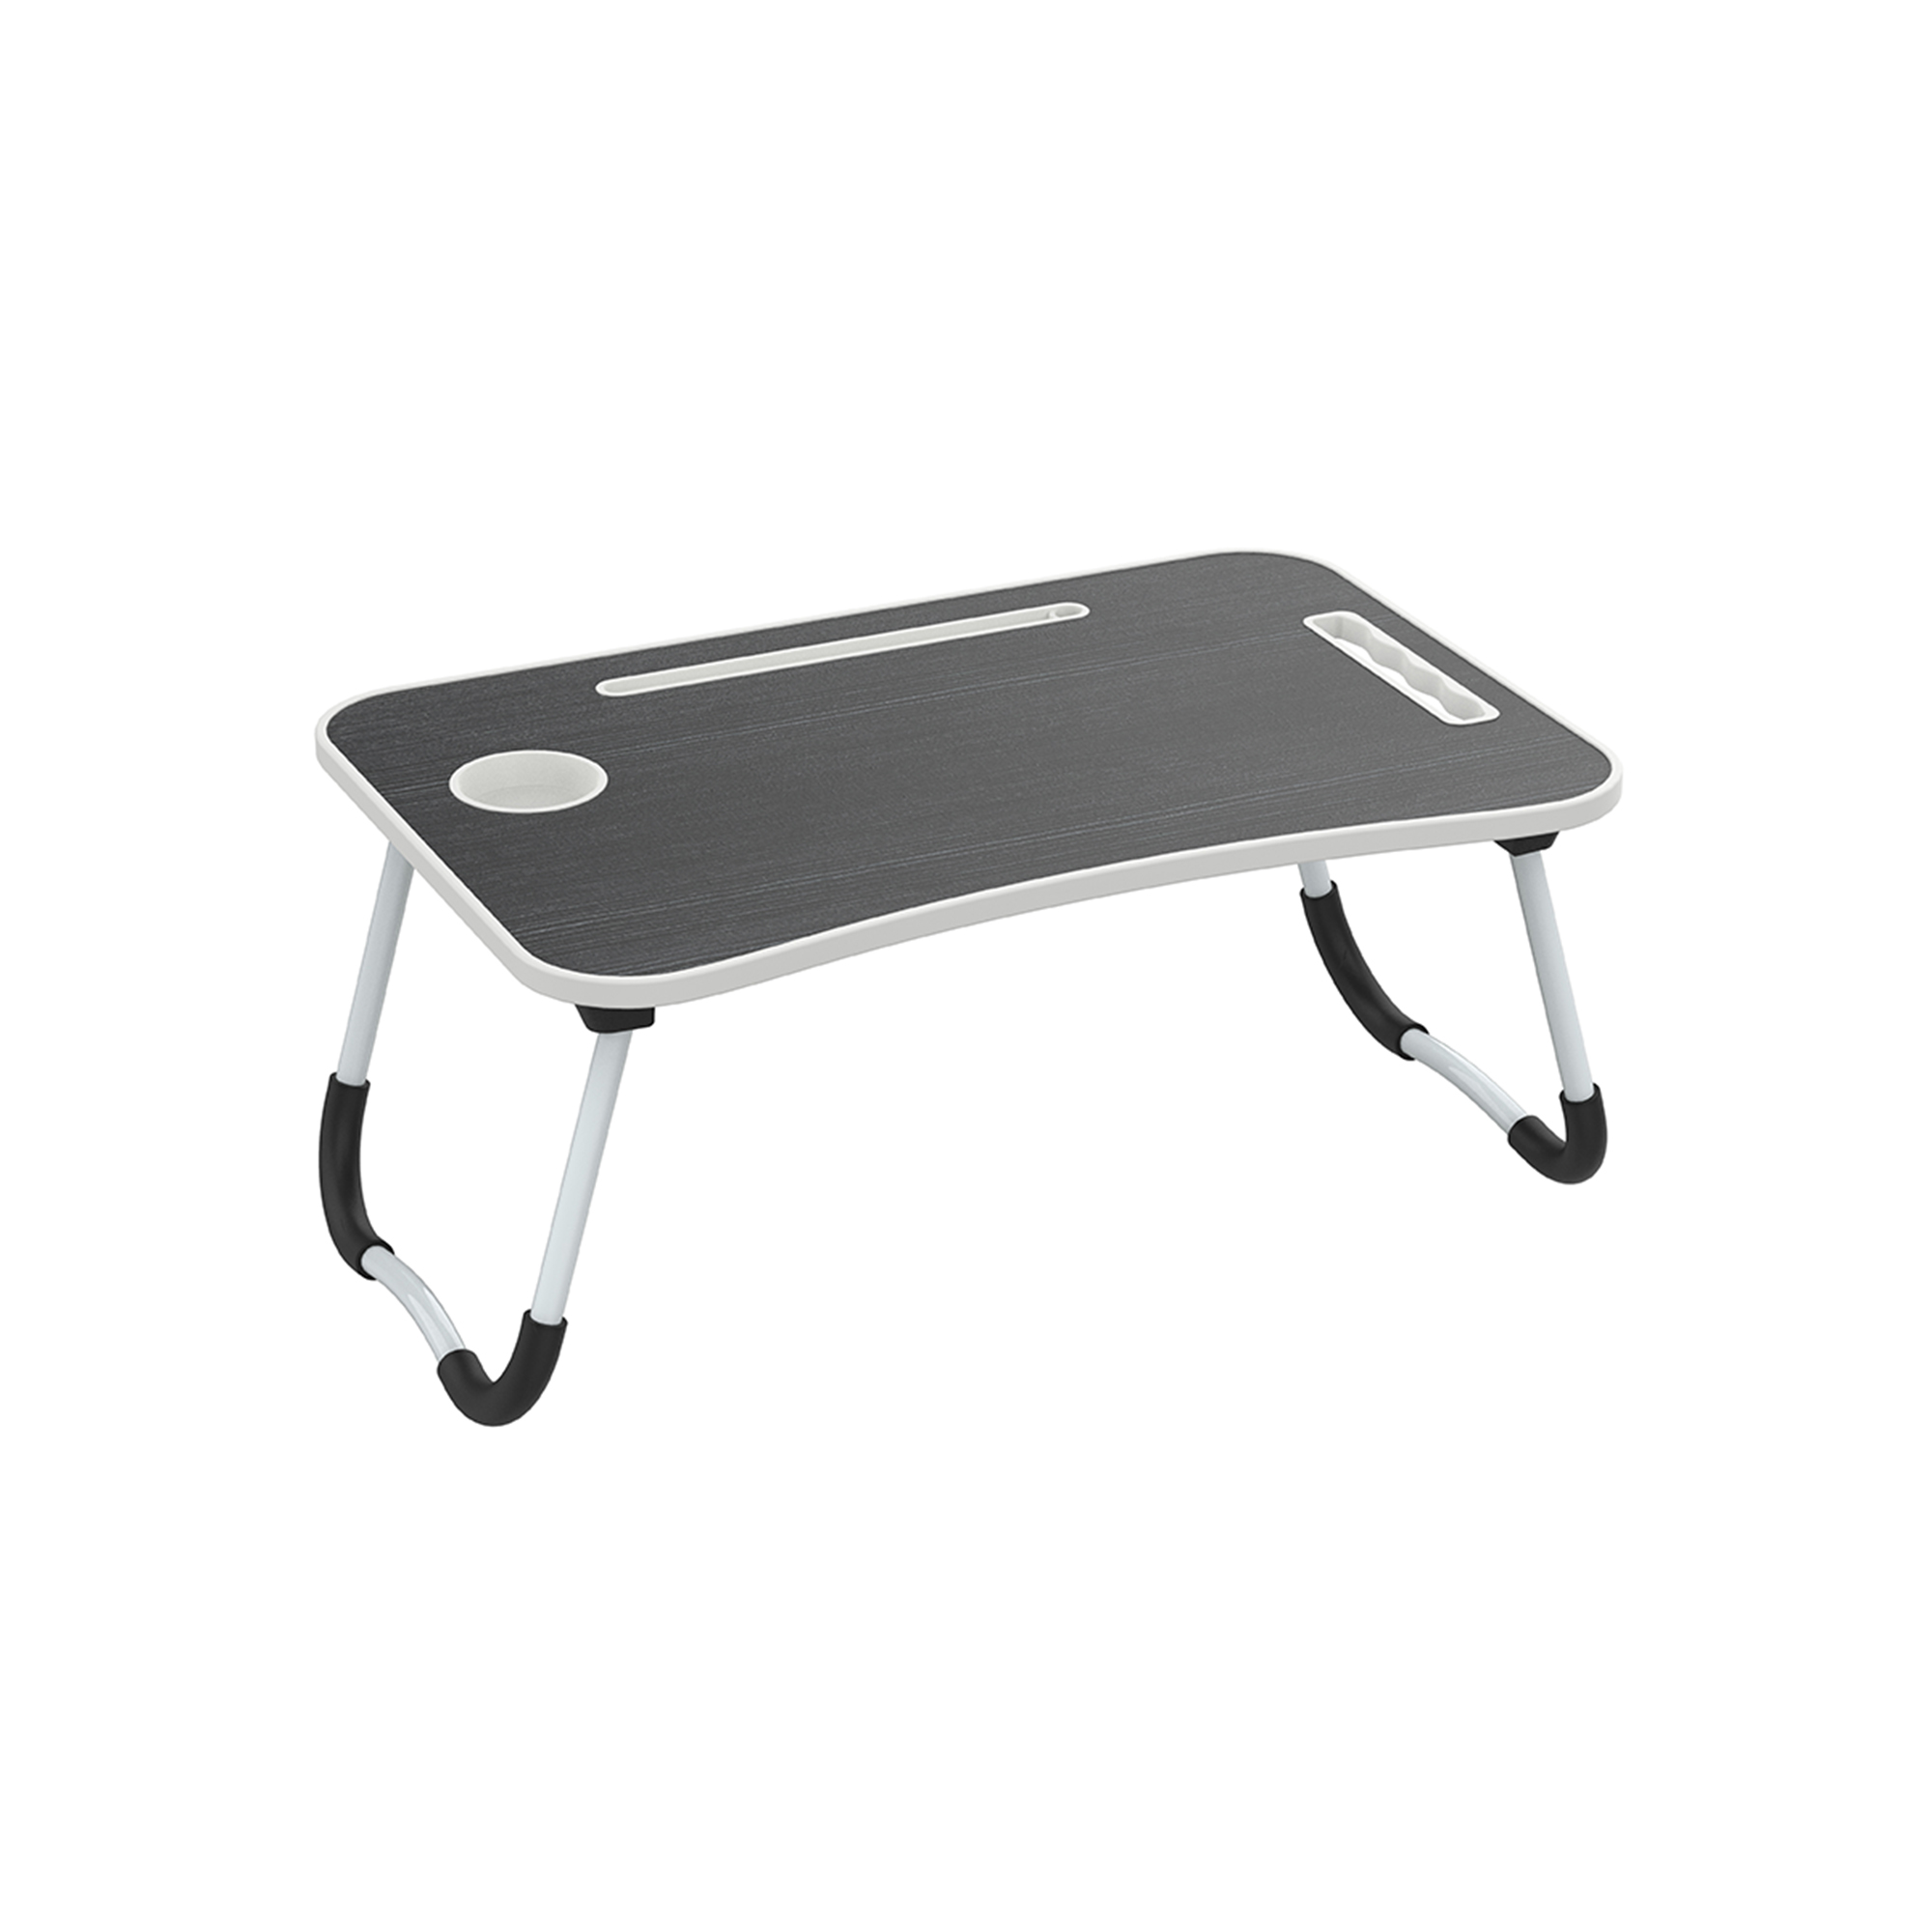 Foldable laptop table